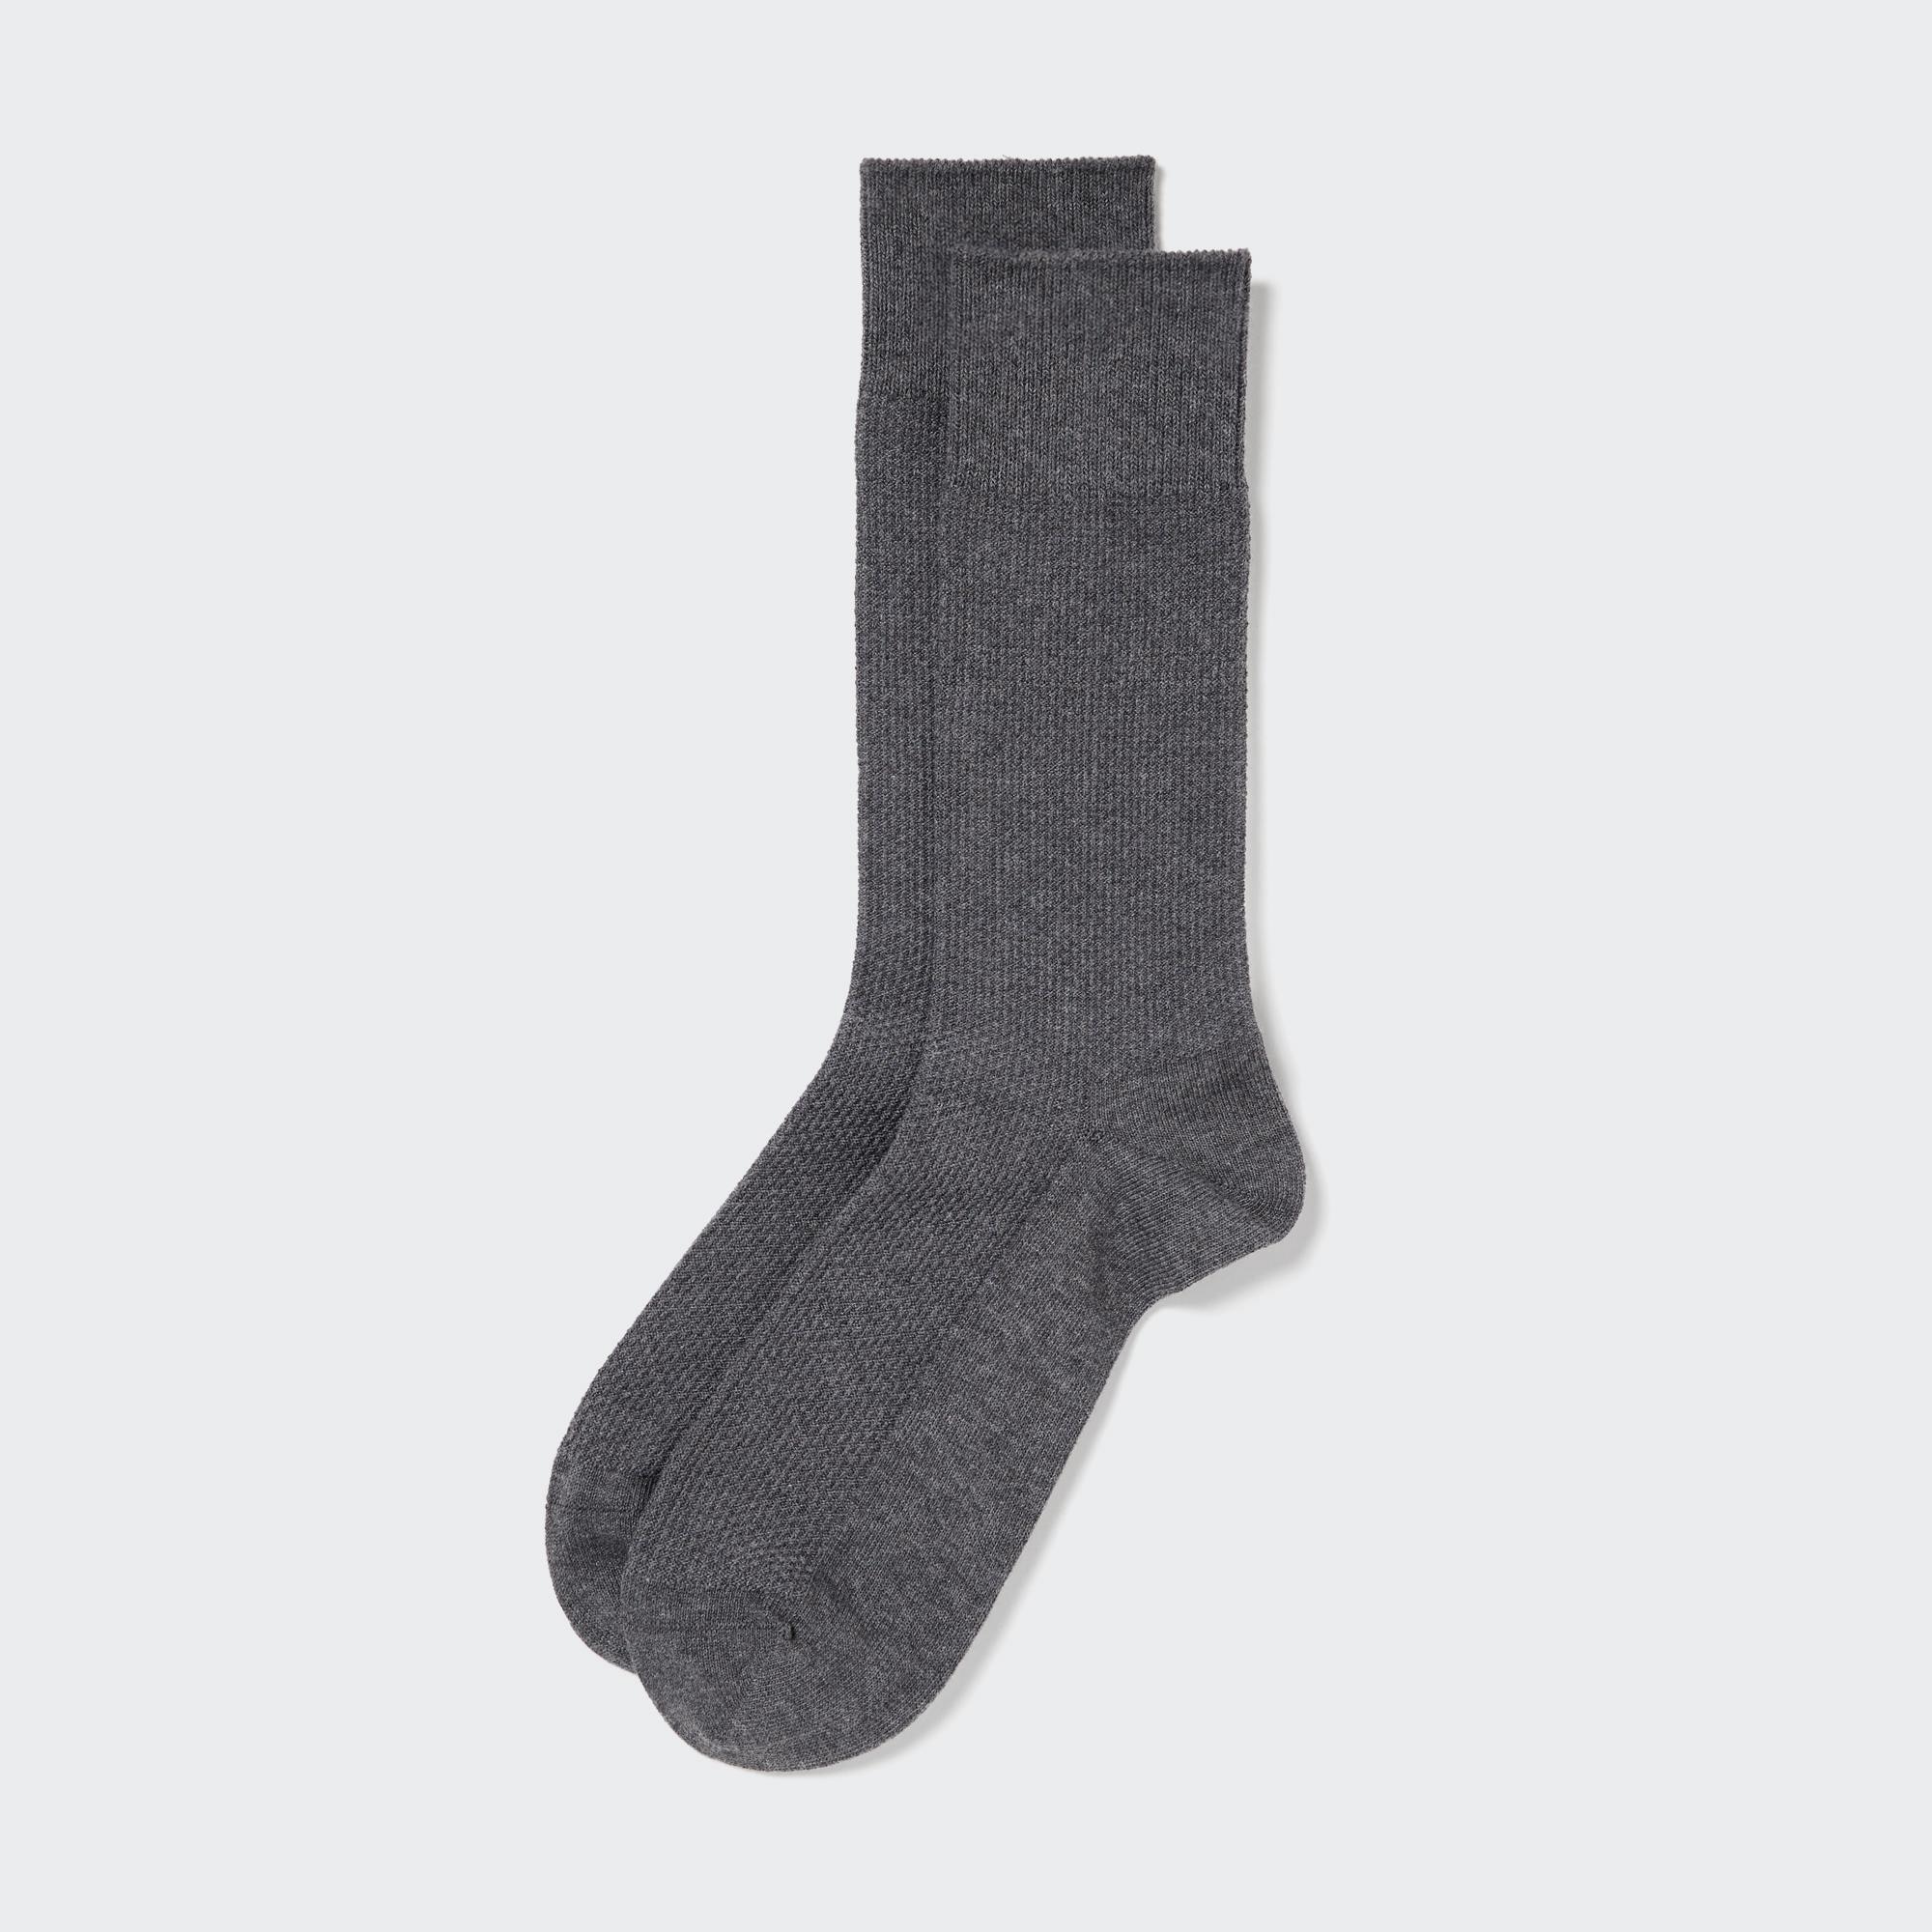 Uniqlo T Shirt Review (Bonus Sock Review) 